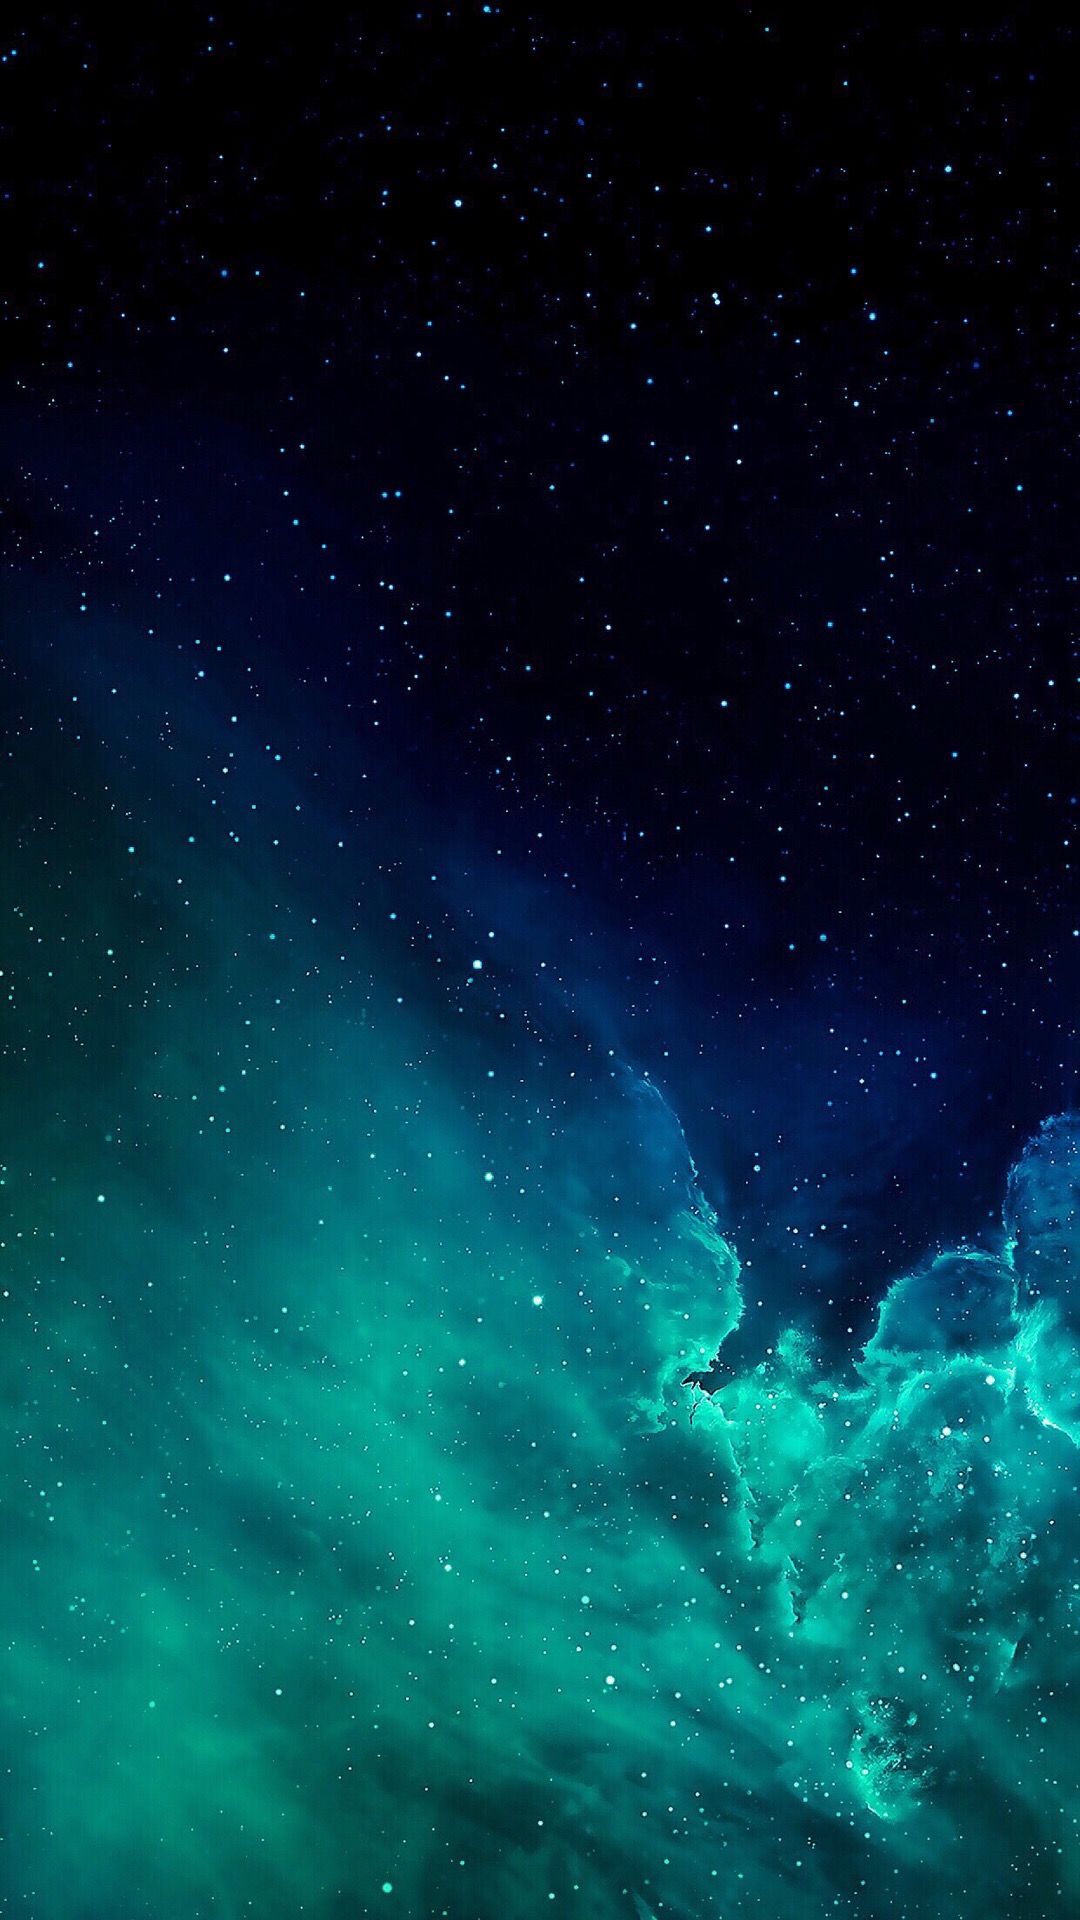 4k Nebula Wallpaper iPhone X Teahub Io